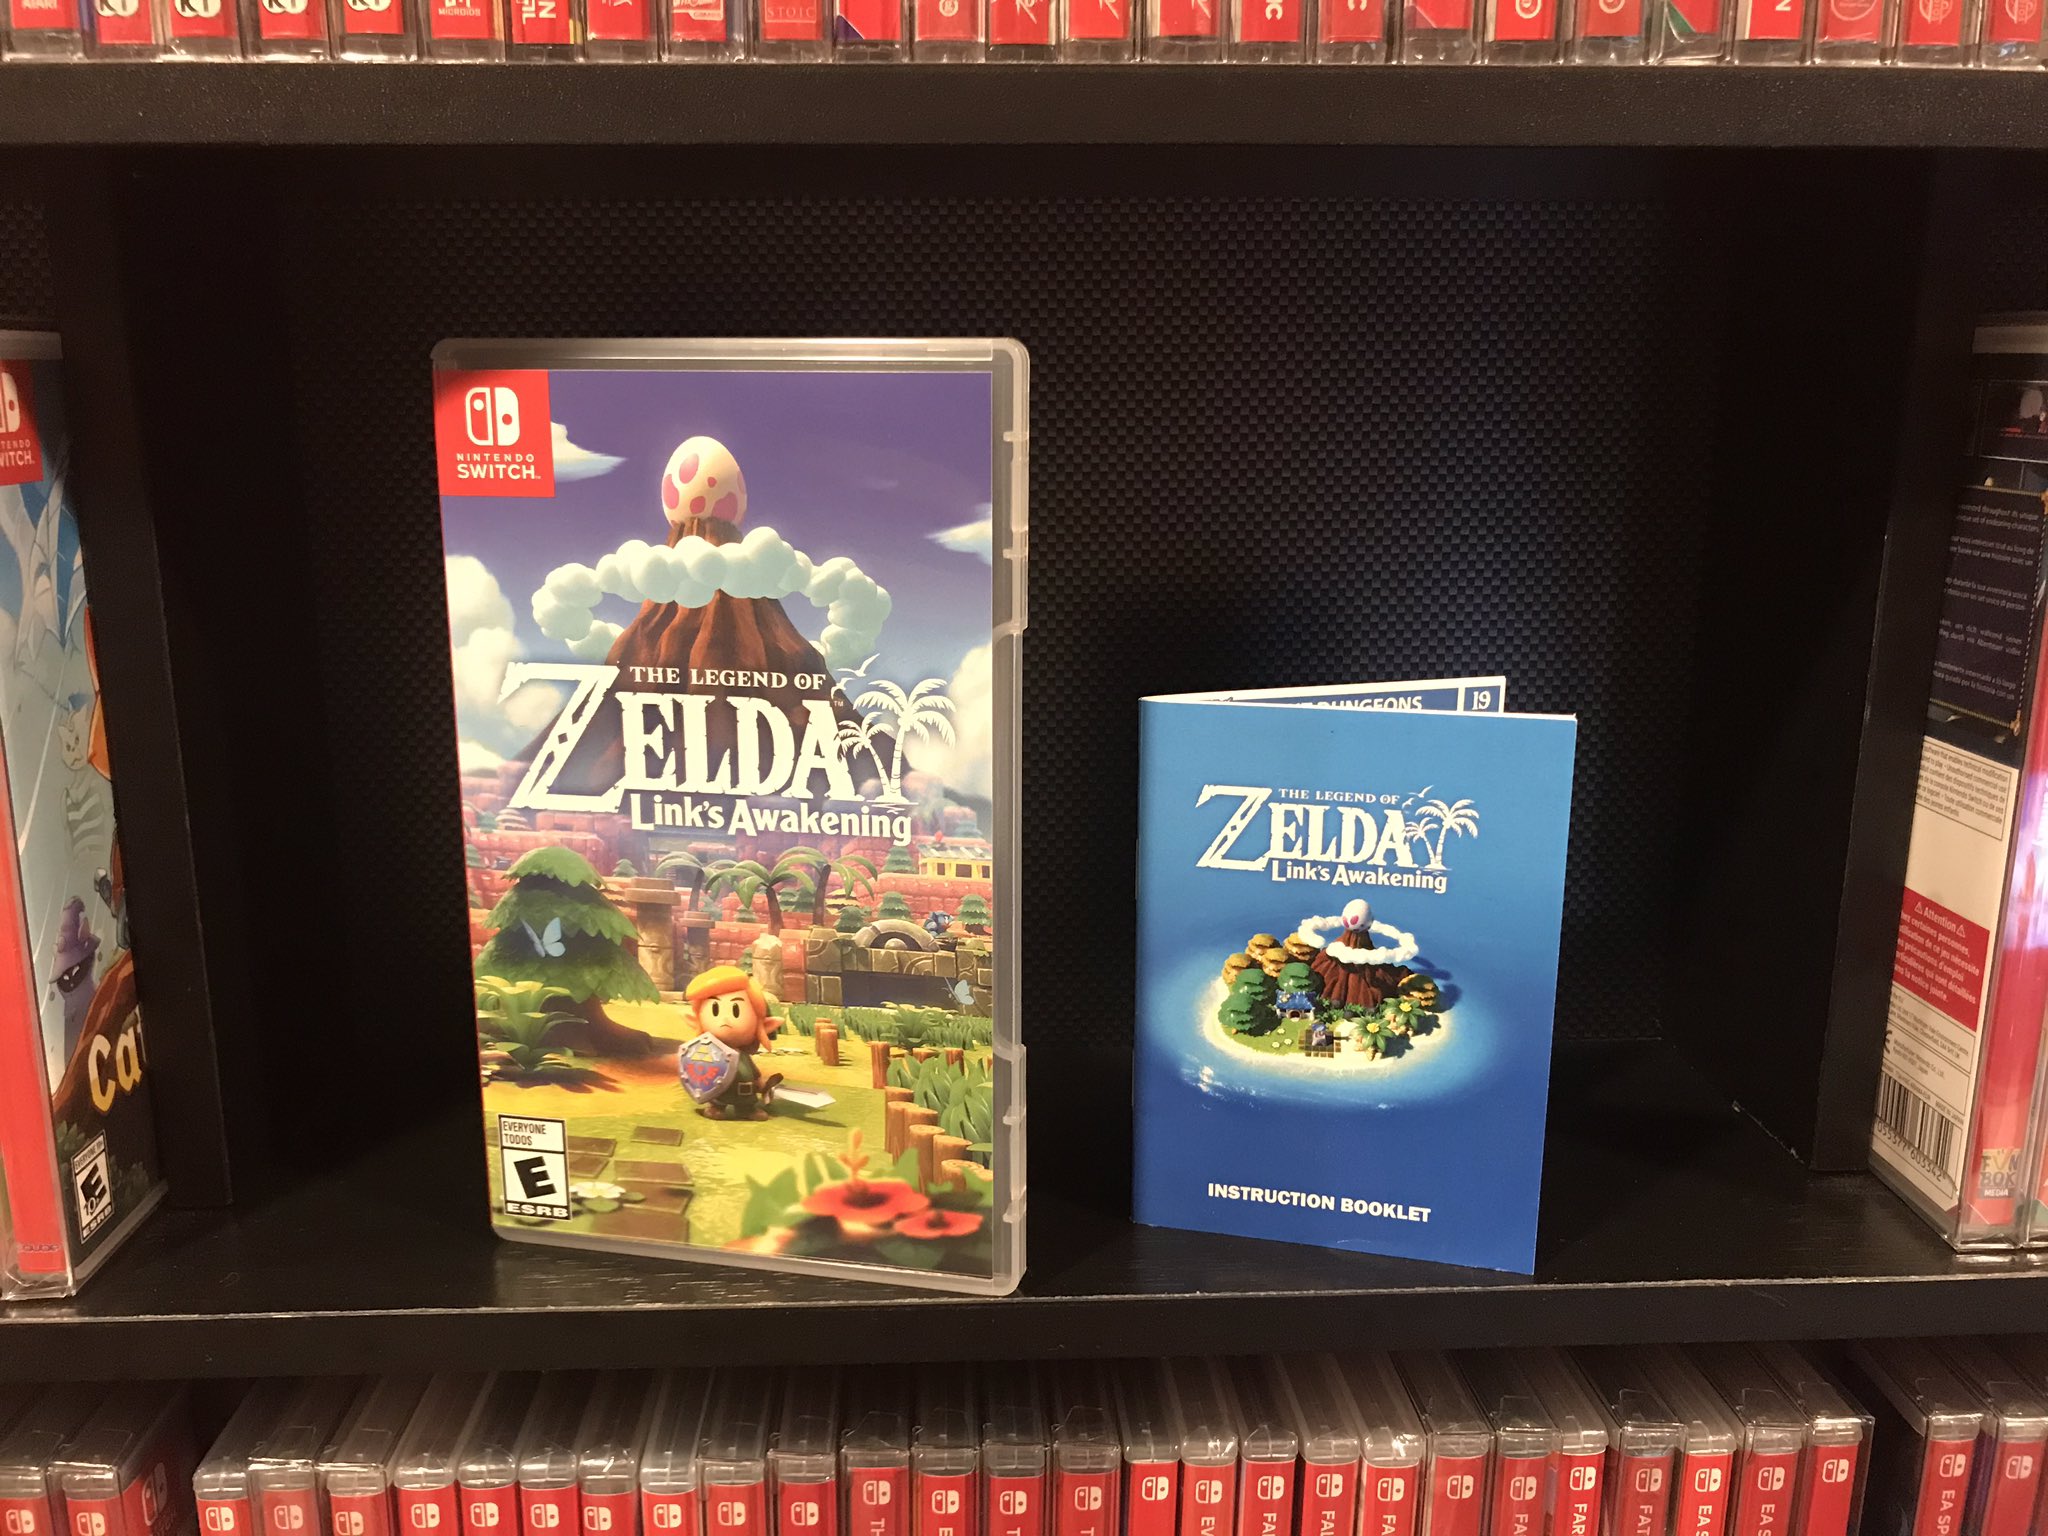 The Legend of Zelda Link's Awakening Nintendo Switch Dreamer Edition NEW